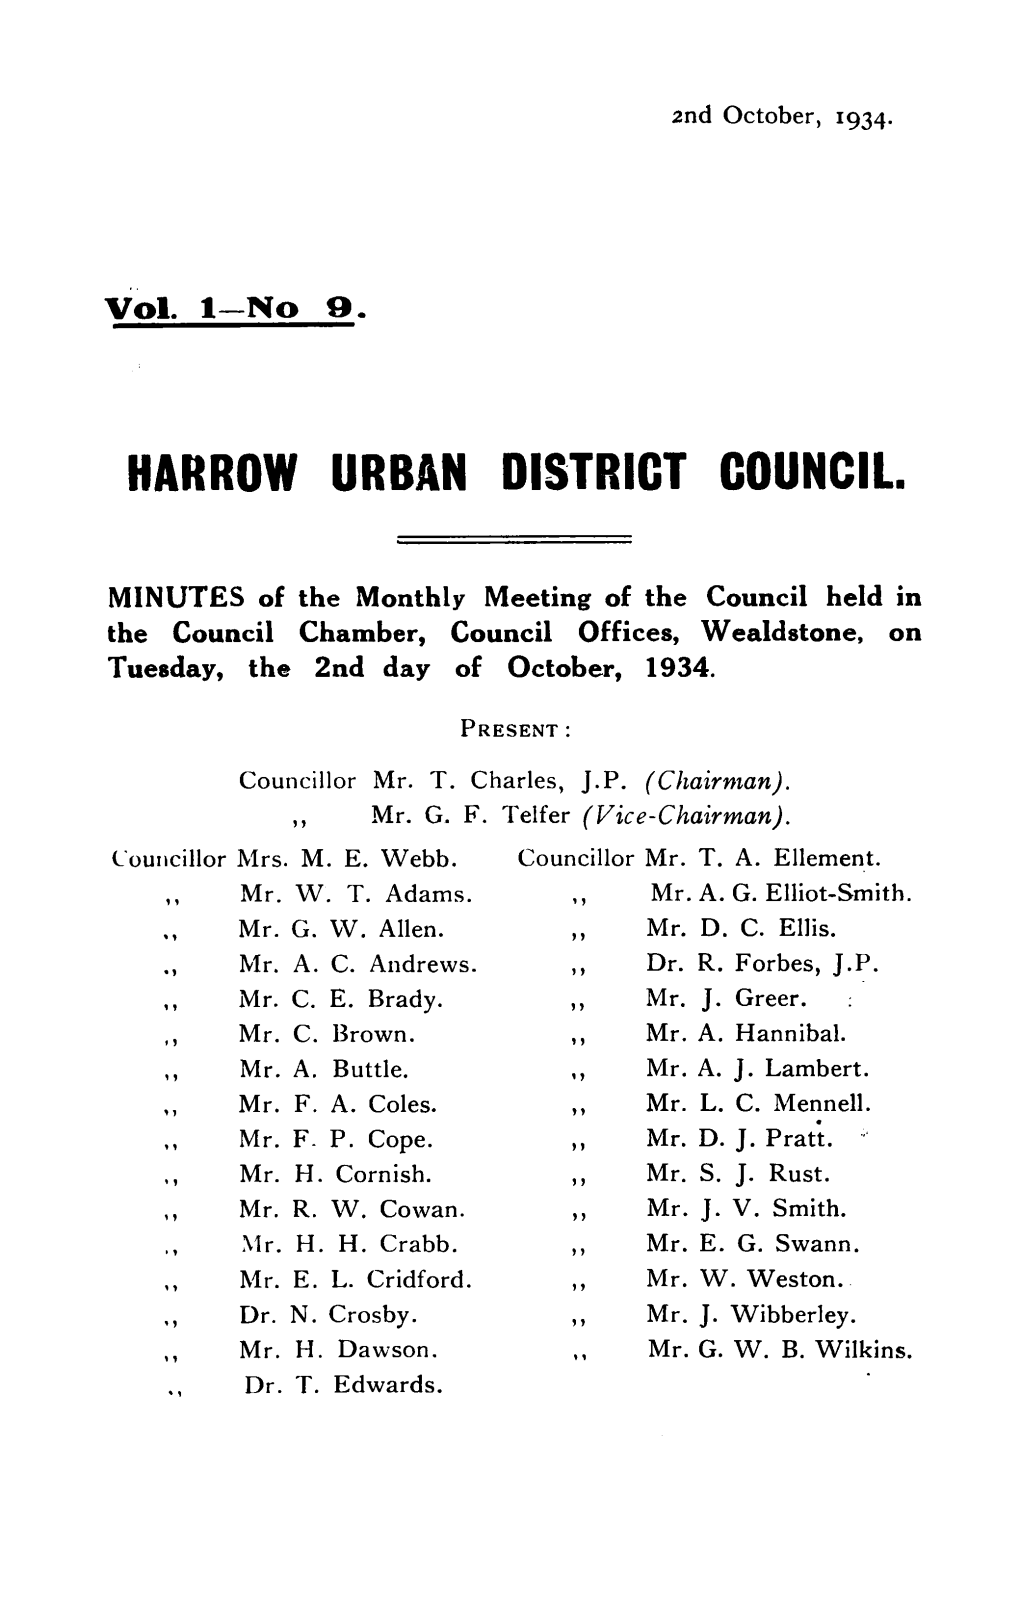 Harrow Urban District Council